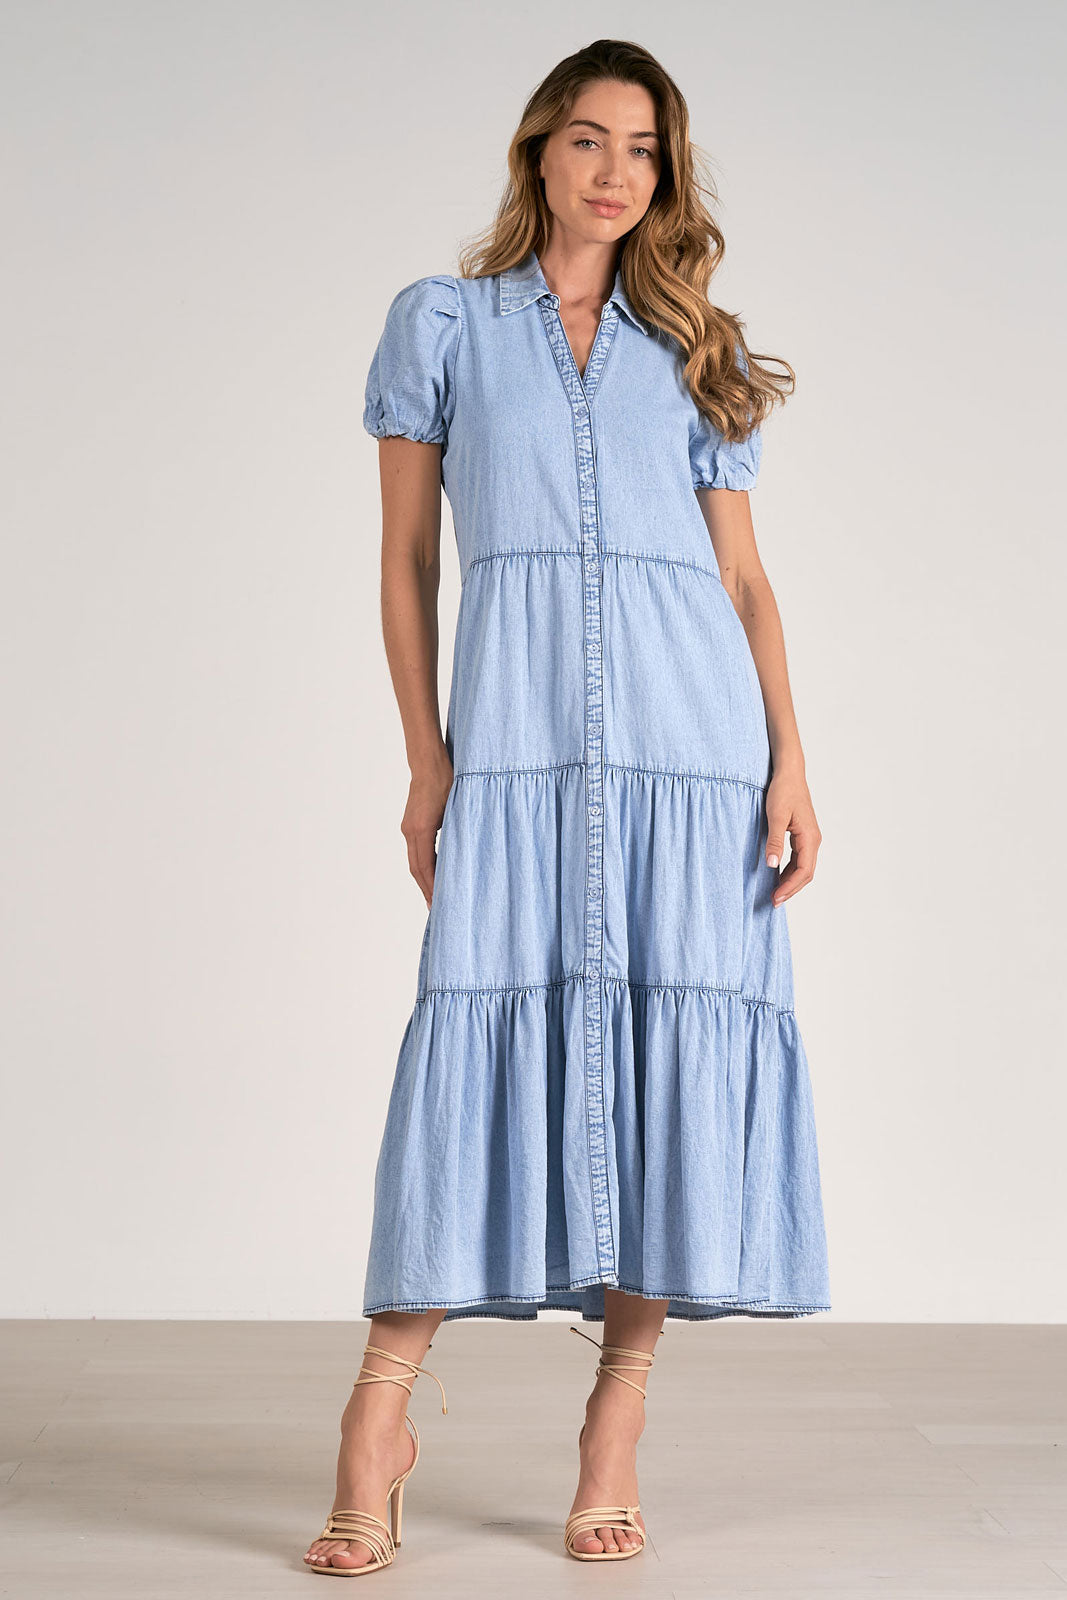 Elan Short Sleeve Midi Dress at Maria Vincent Boutique